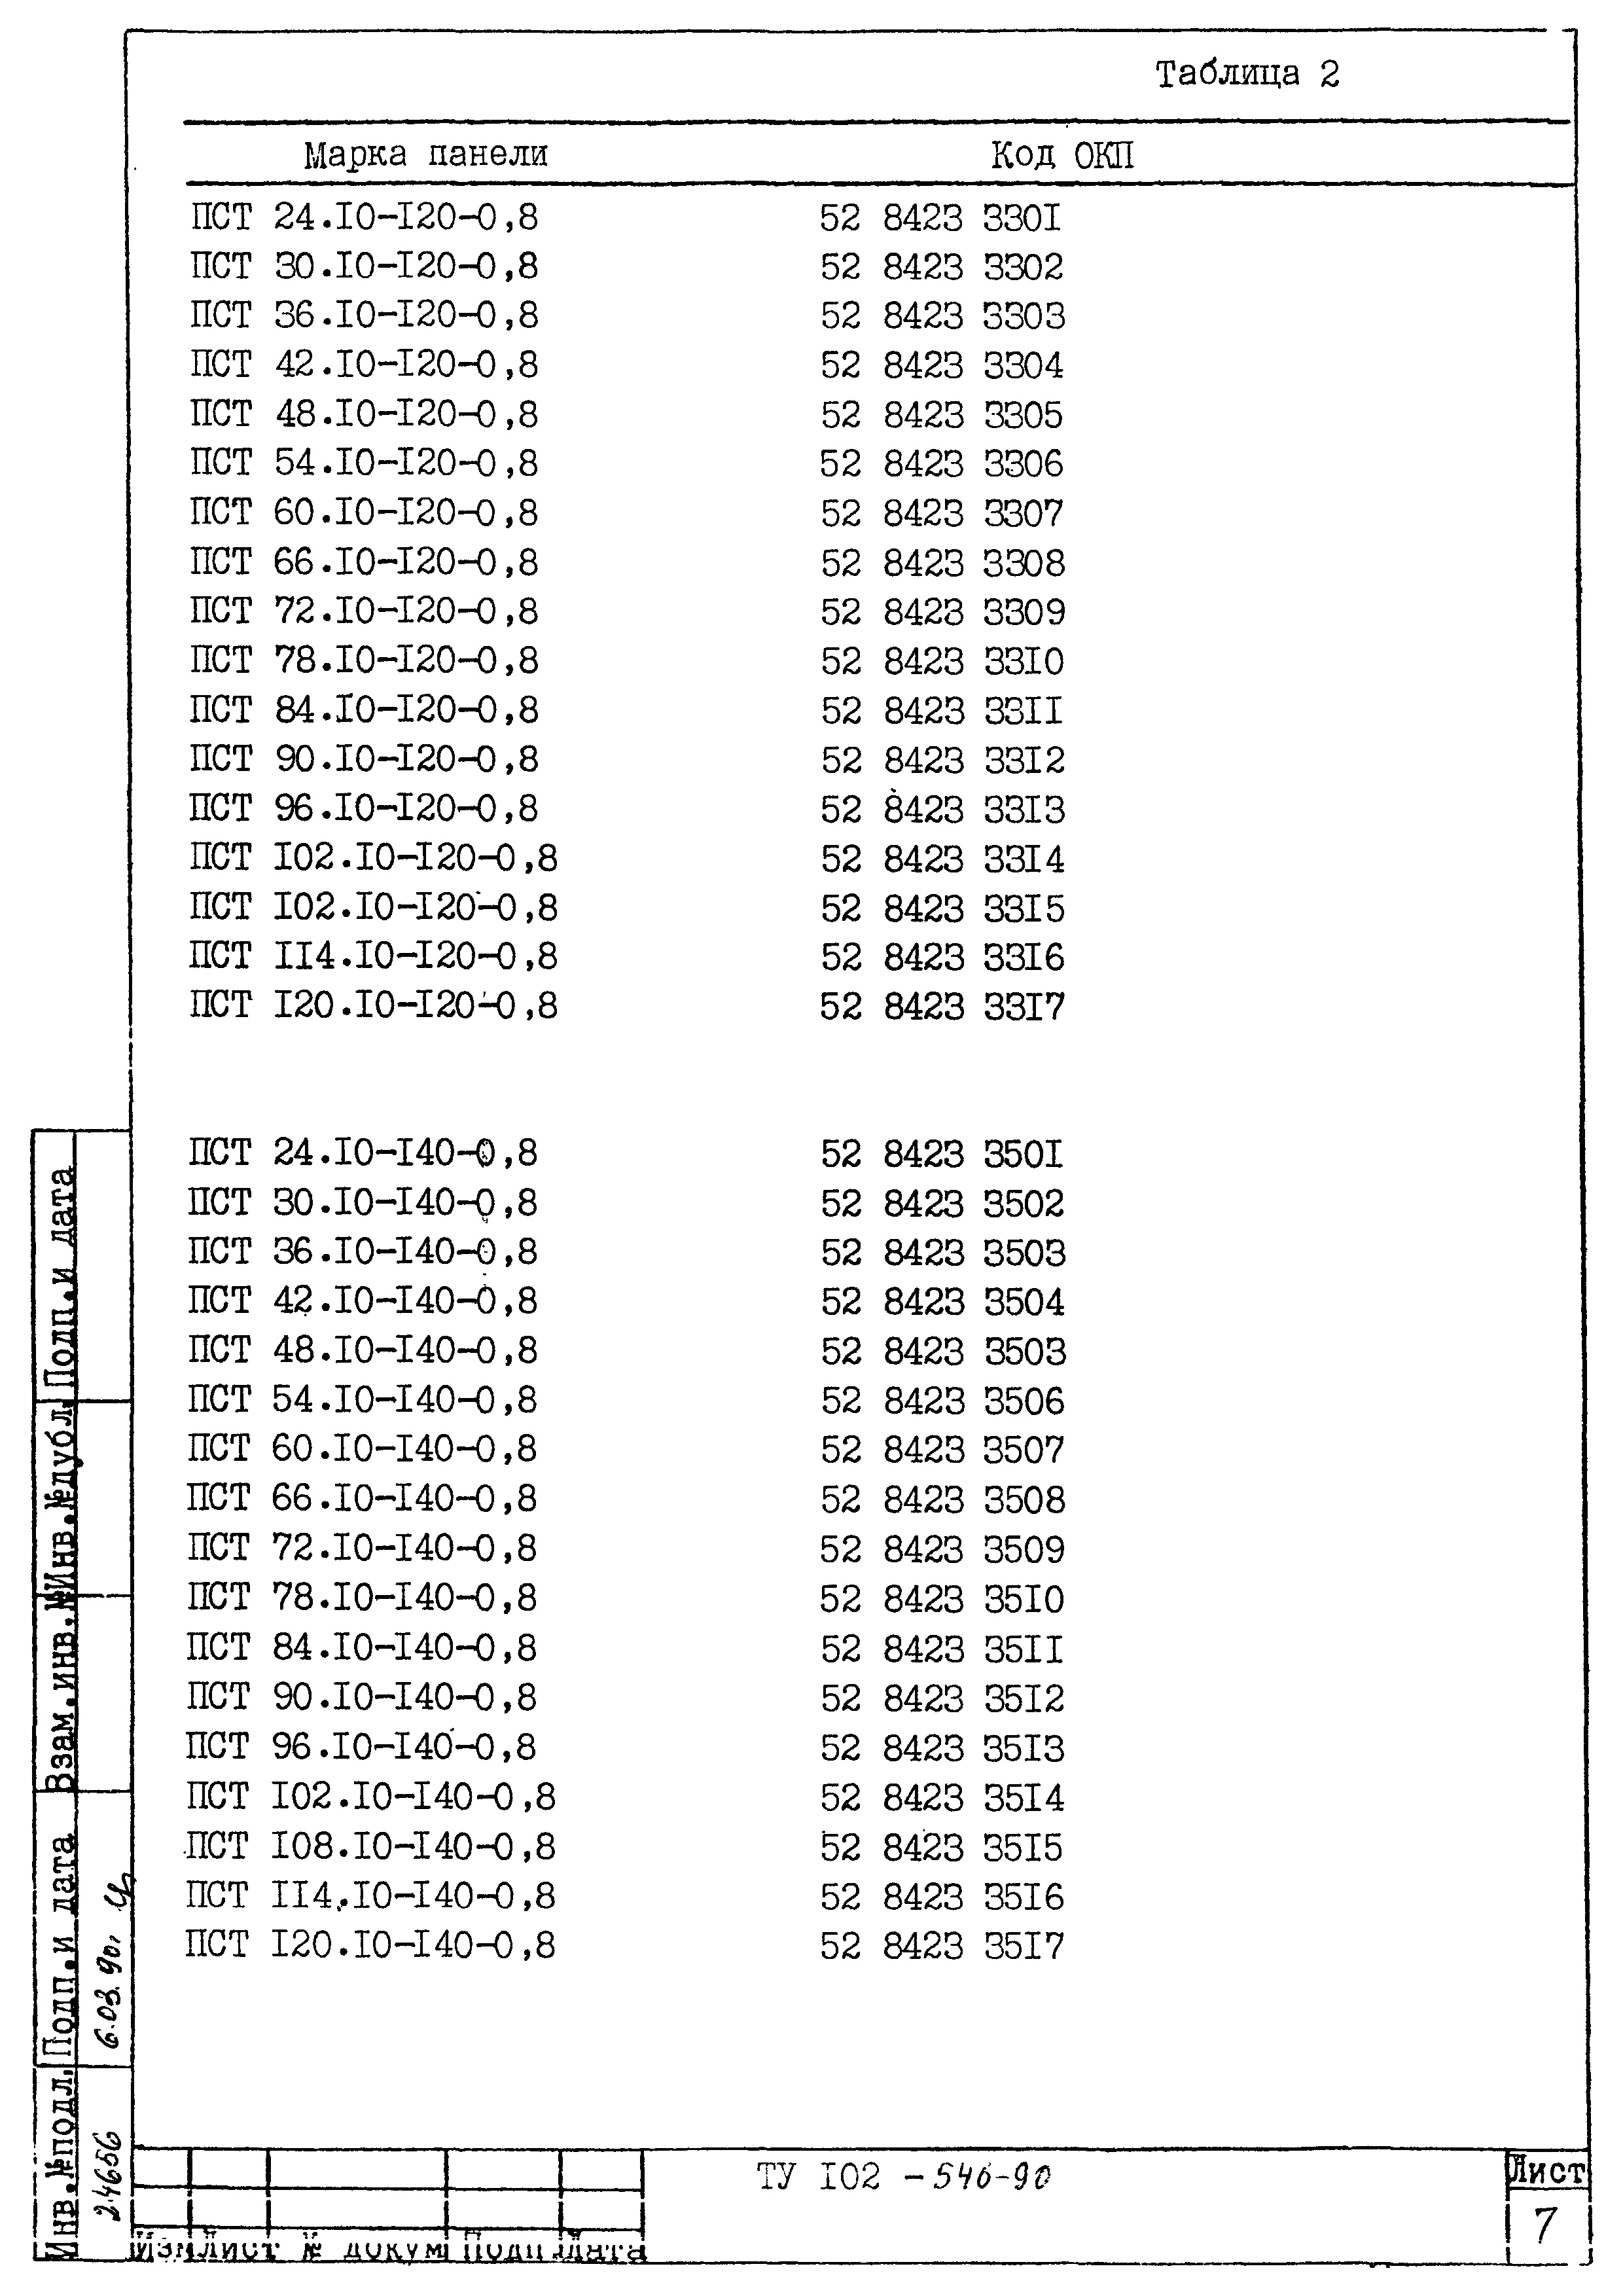 ТУ 102-546-90